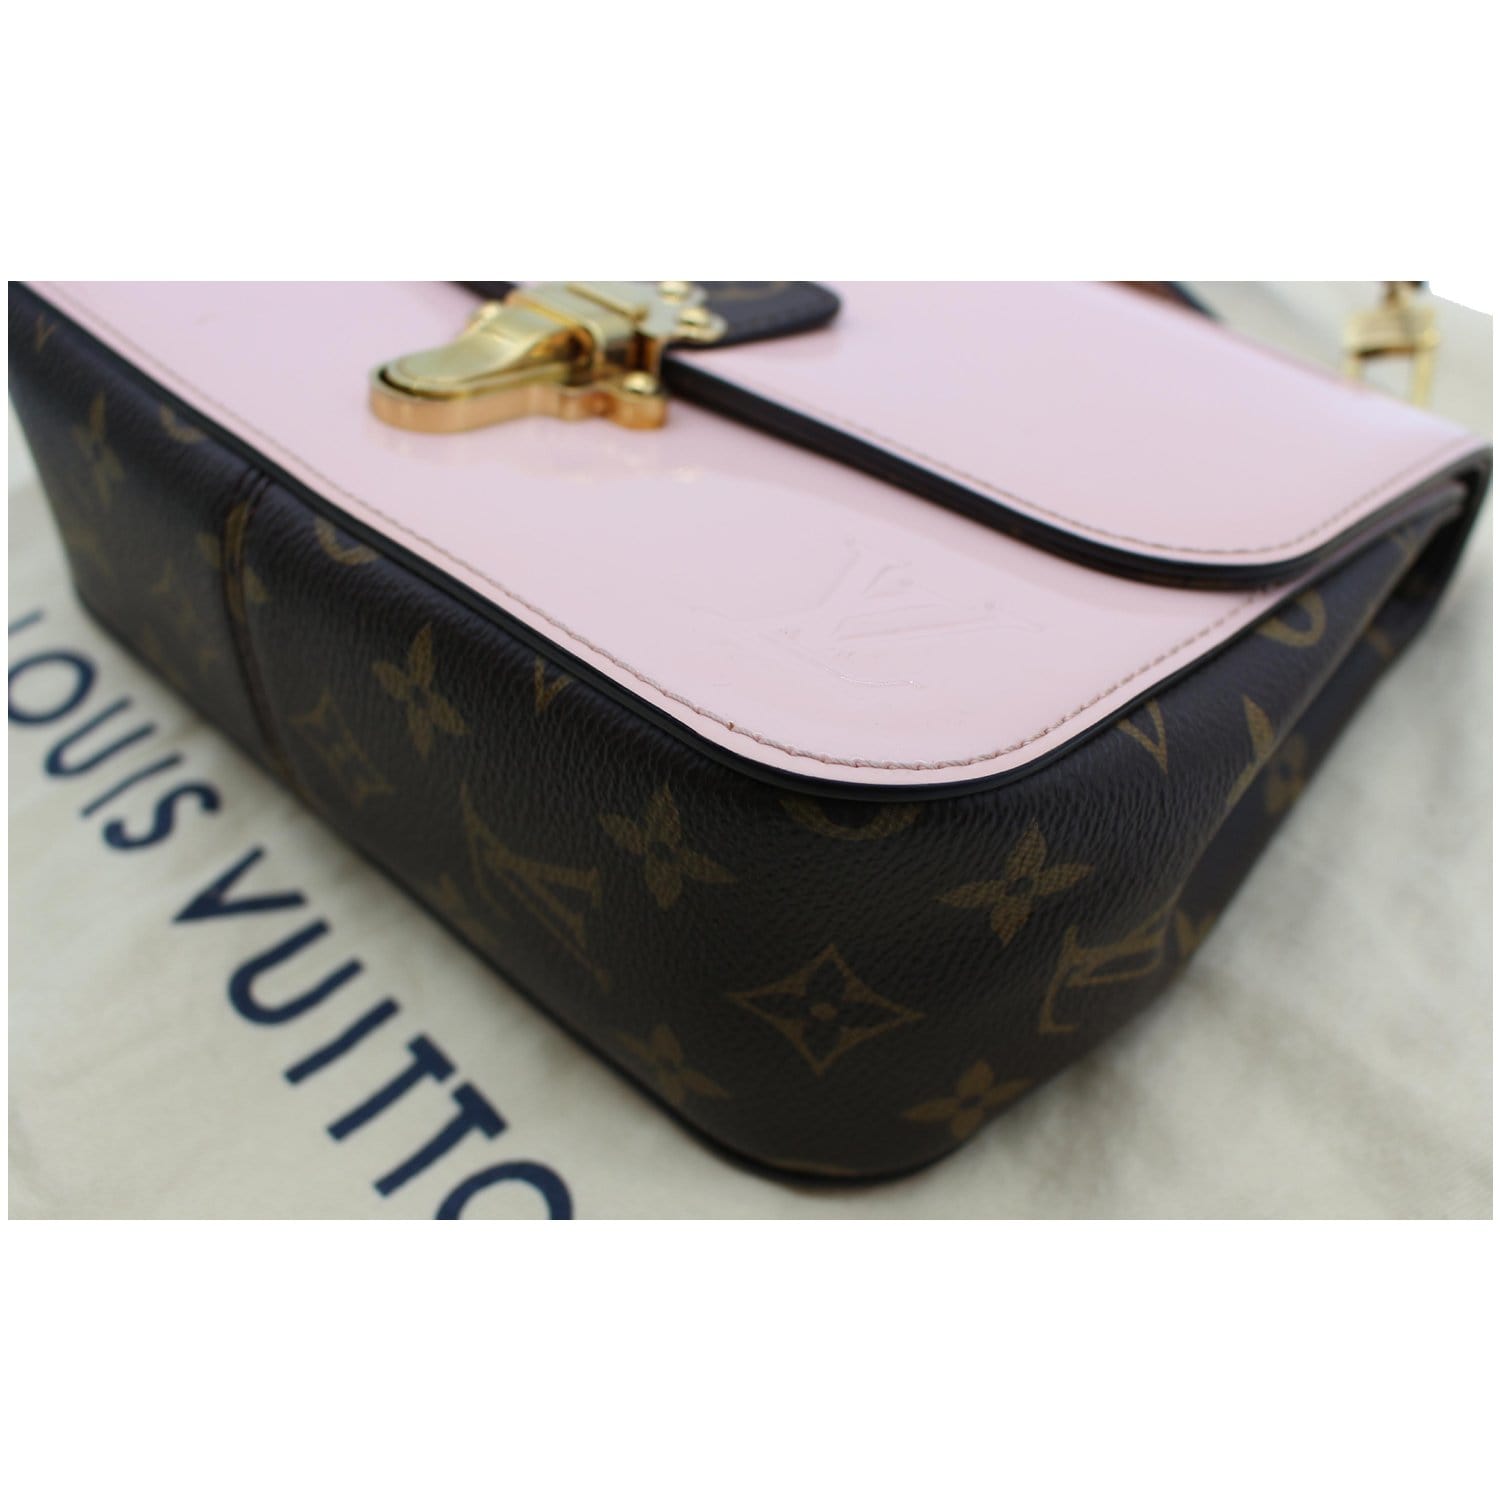 Louis Vuitton Cherrywood Bb Handbag